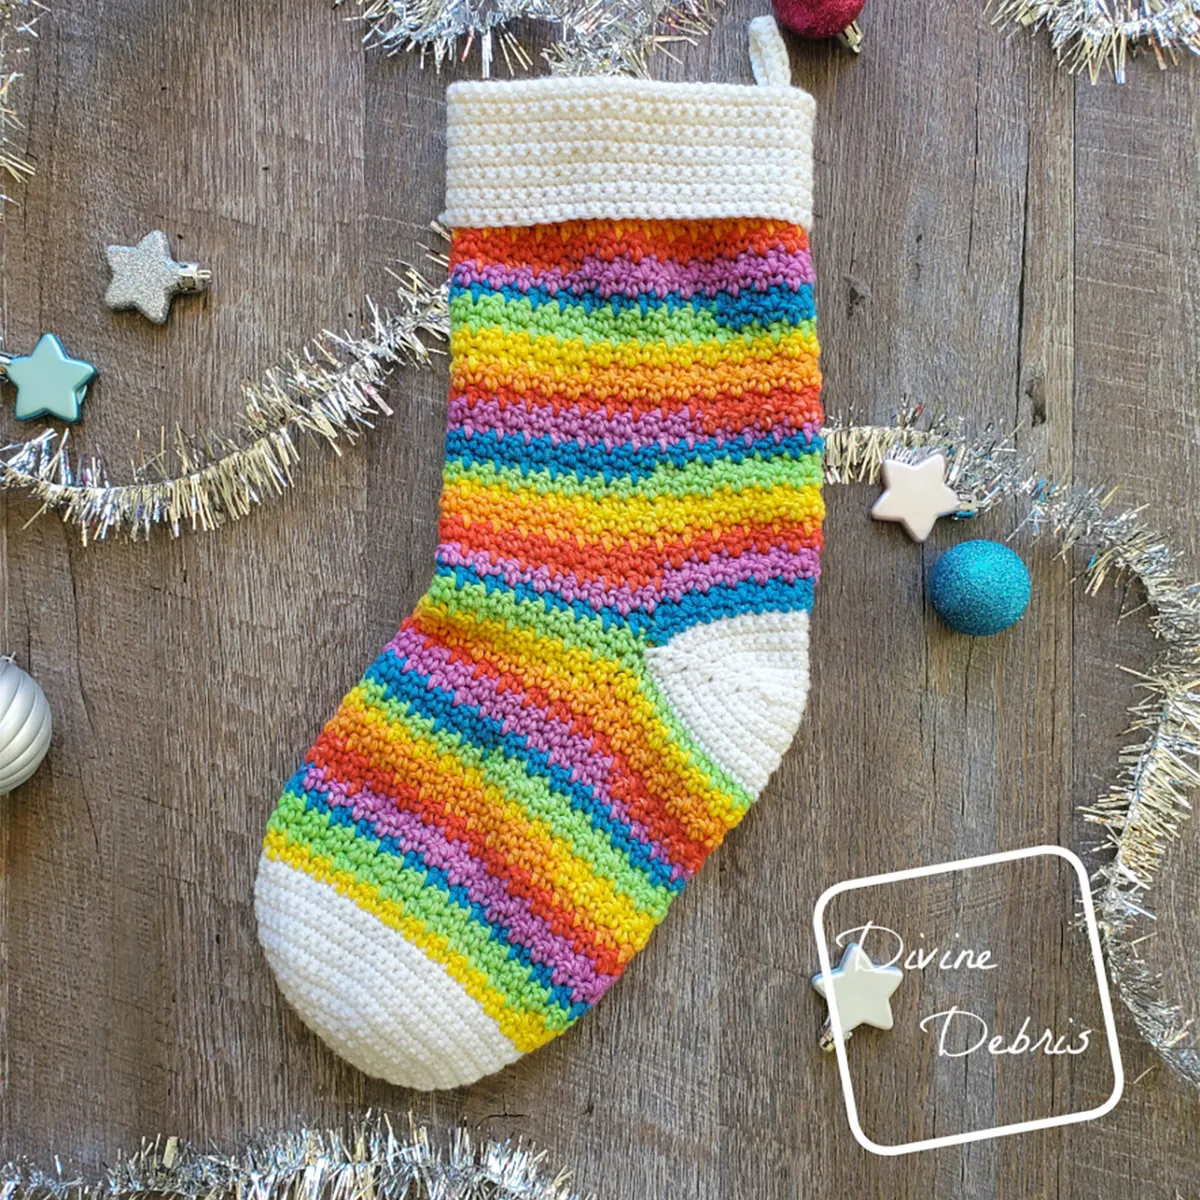 Devine Debris Free Crochet CHristmas stocking pattern